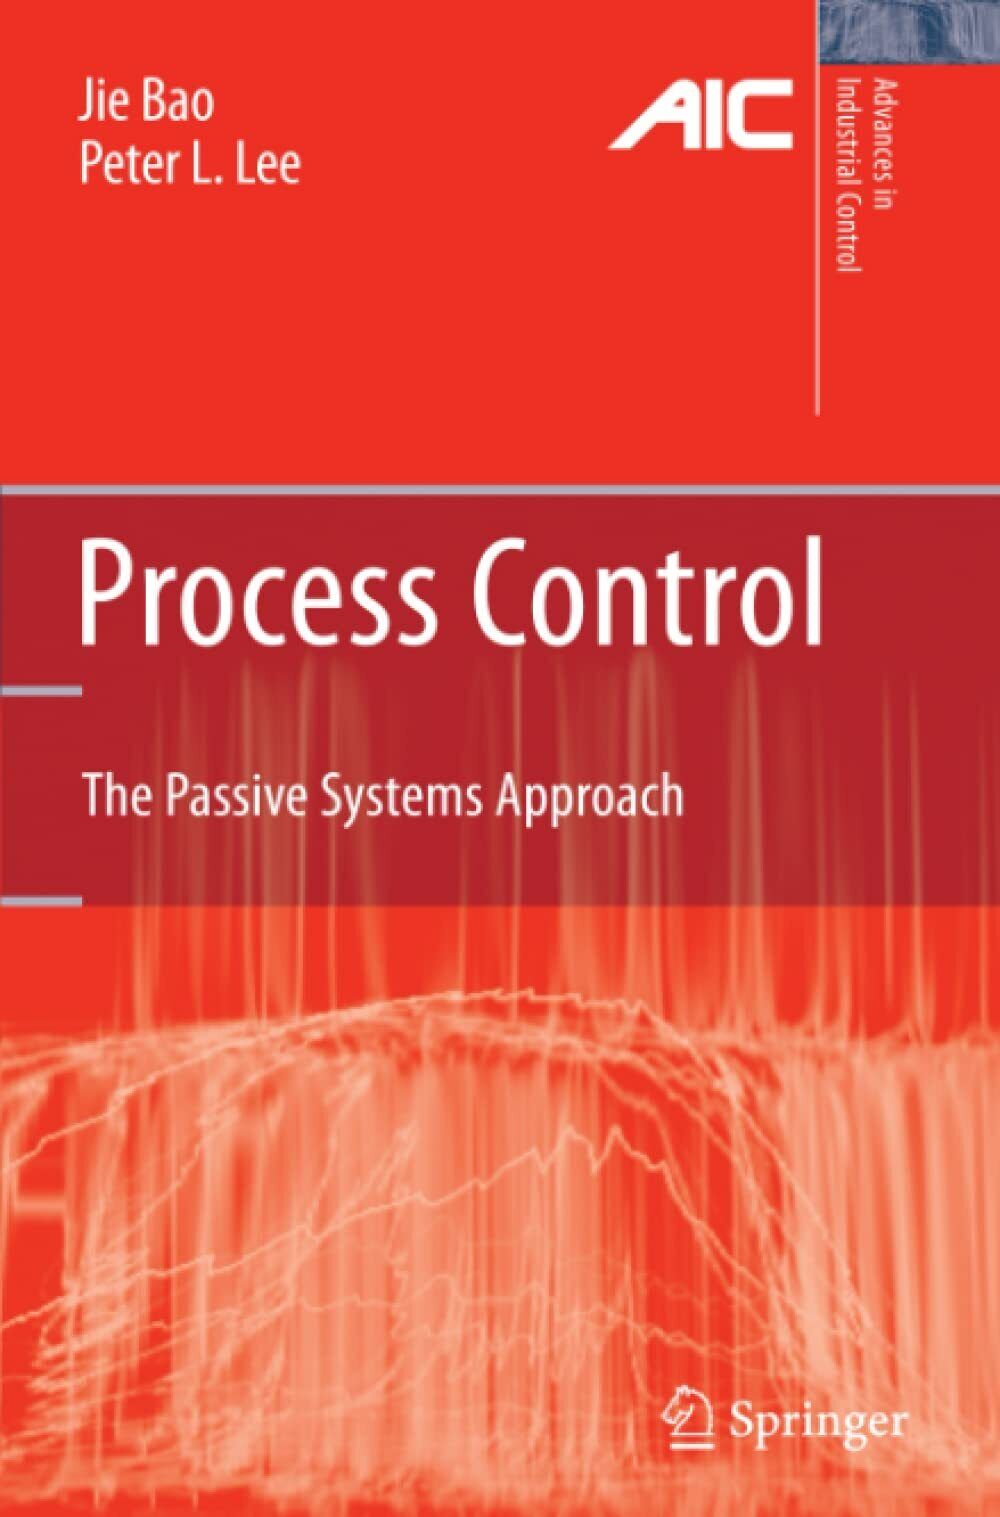 Process Control - Jie Bao, Peter L. Lee - Springer, 2010